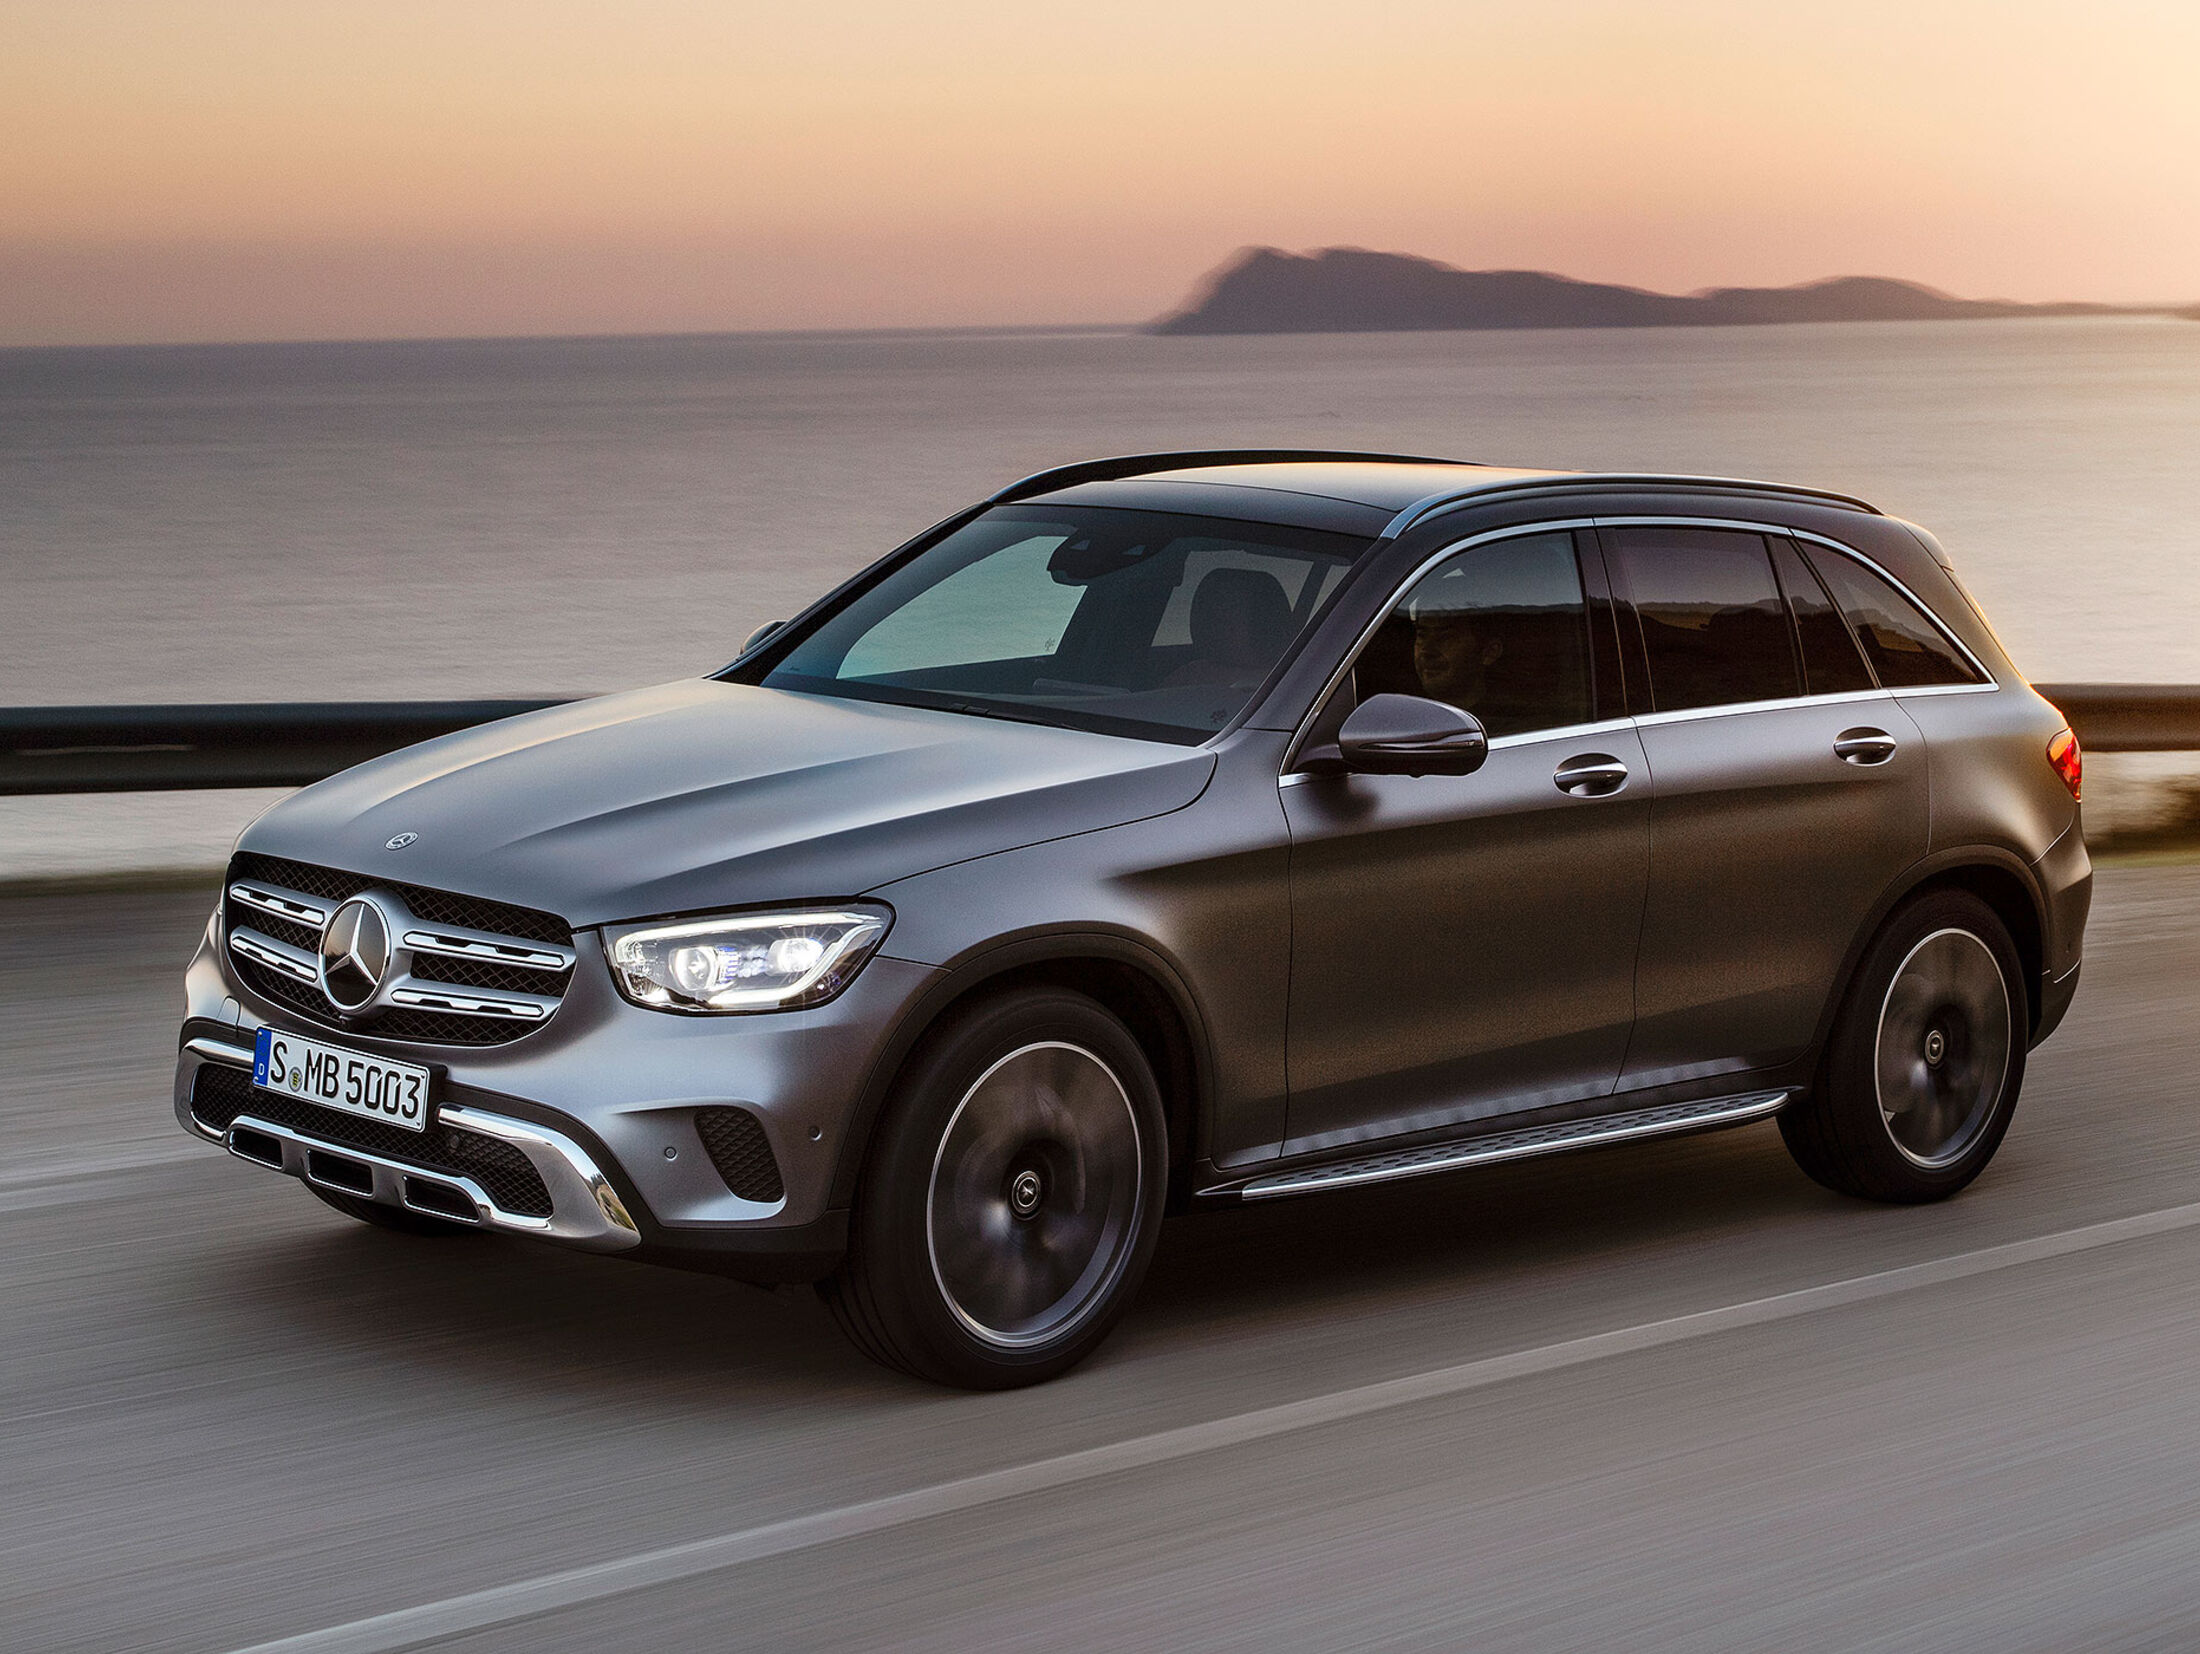 https://imgr1.auto-motor-und-sport.de/Mercedes-GLC-Facelift-2019-Sperrfrist-28-2--jsonLd4x3-691847d7-1430903.jpg